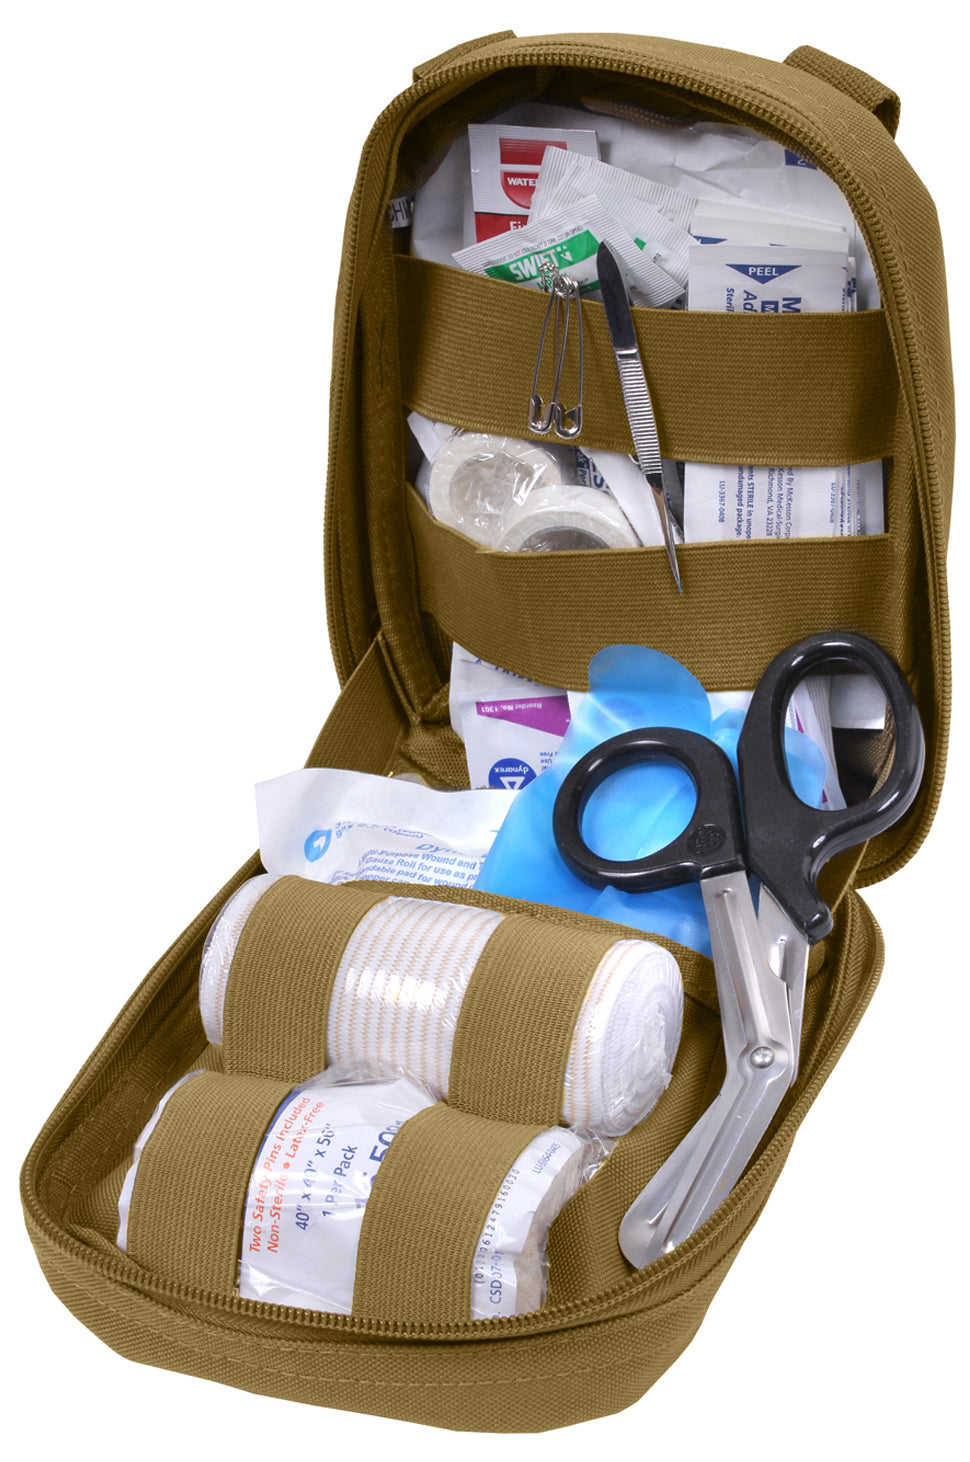 Tactical Molle Bag Medical Bag First Aid Bag EDC Accessory Bag